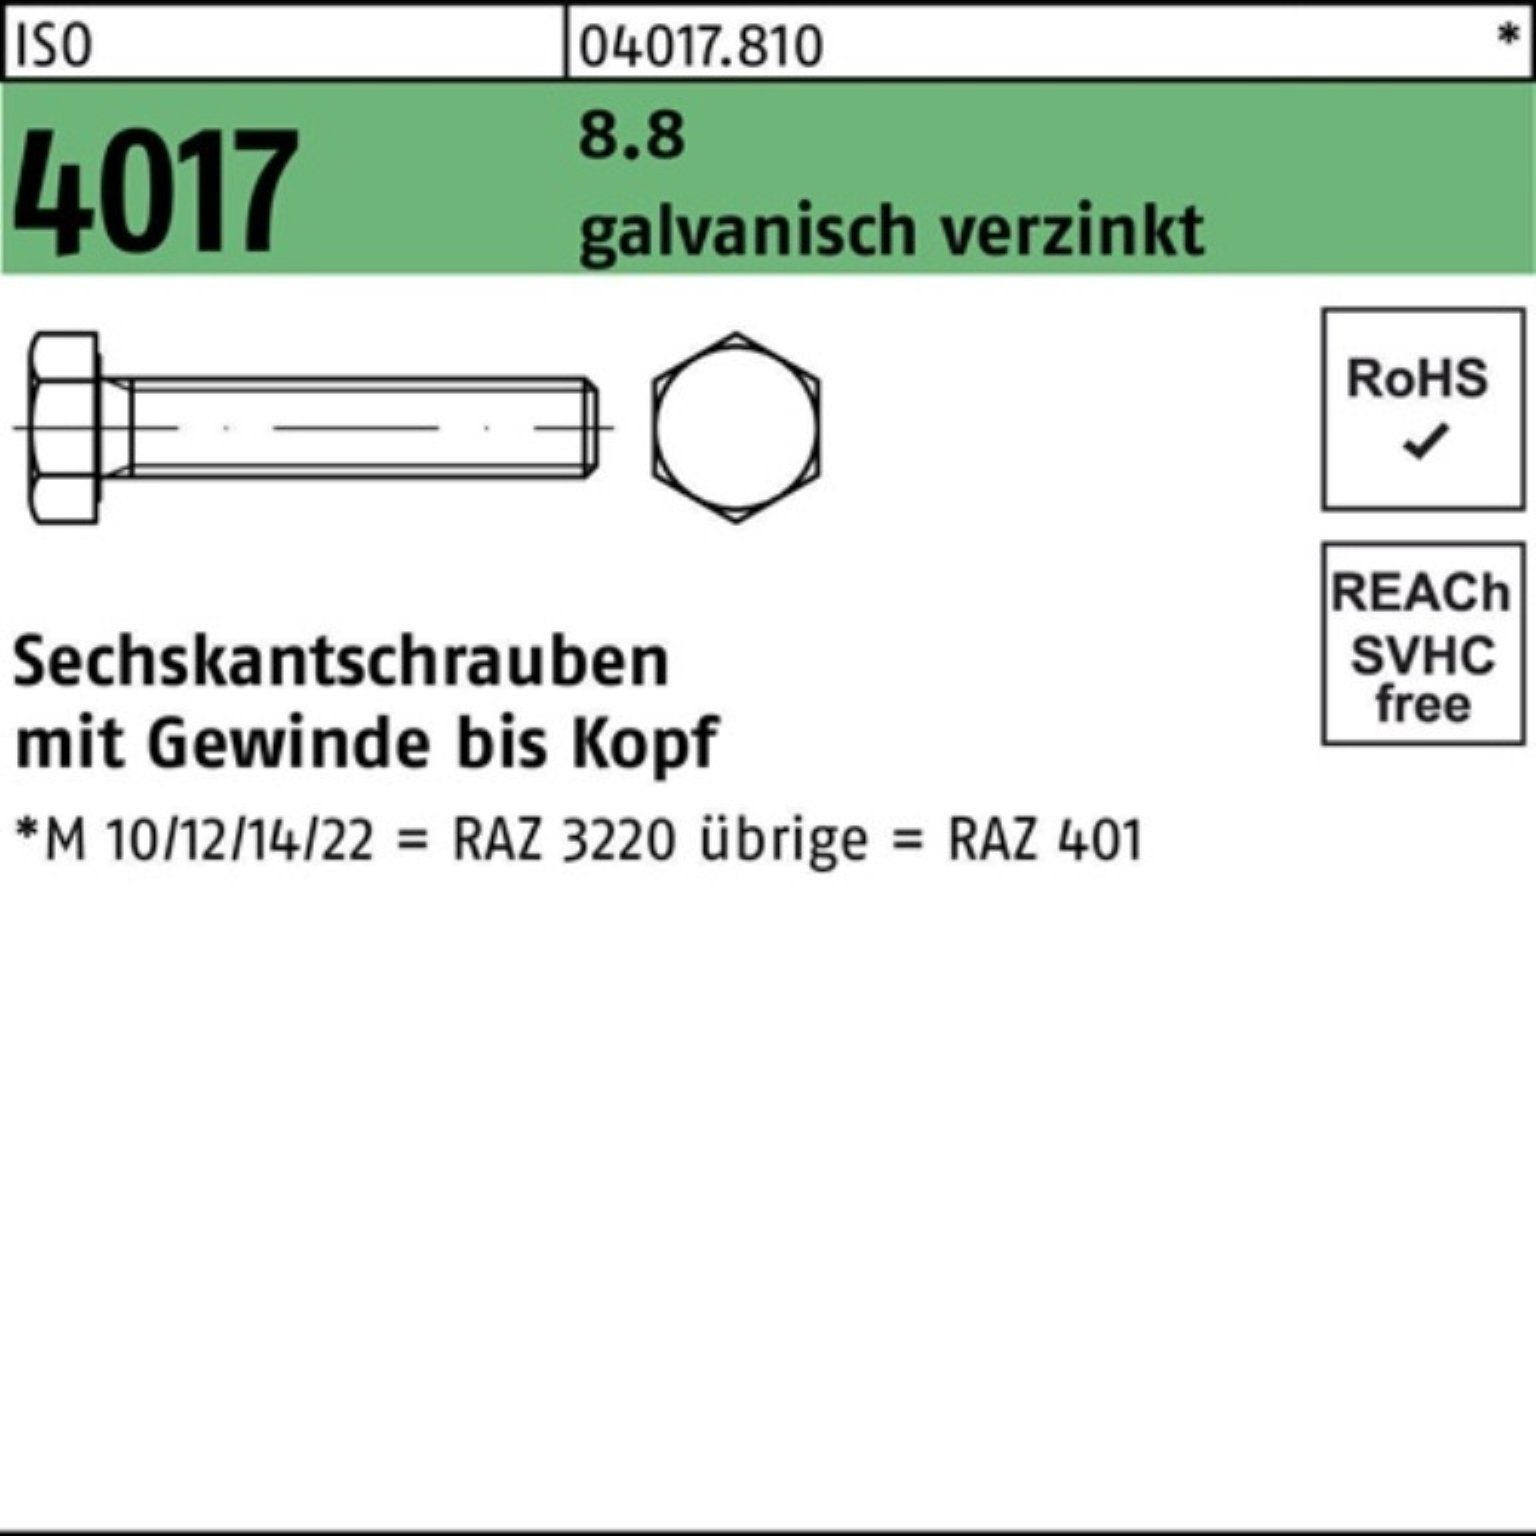 Bufab Sechskantschraube 100er Pack Sechskantschraube St galv.verz. 45 VG 8.8 100 M14x 4017 ISO